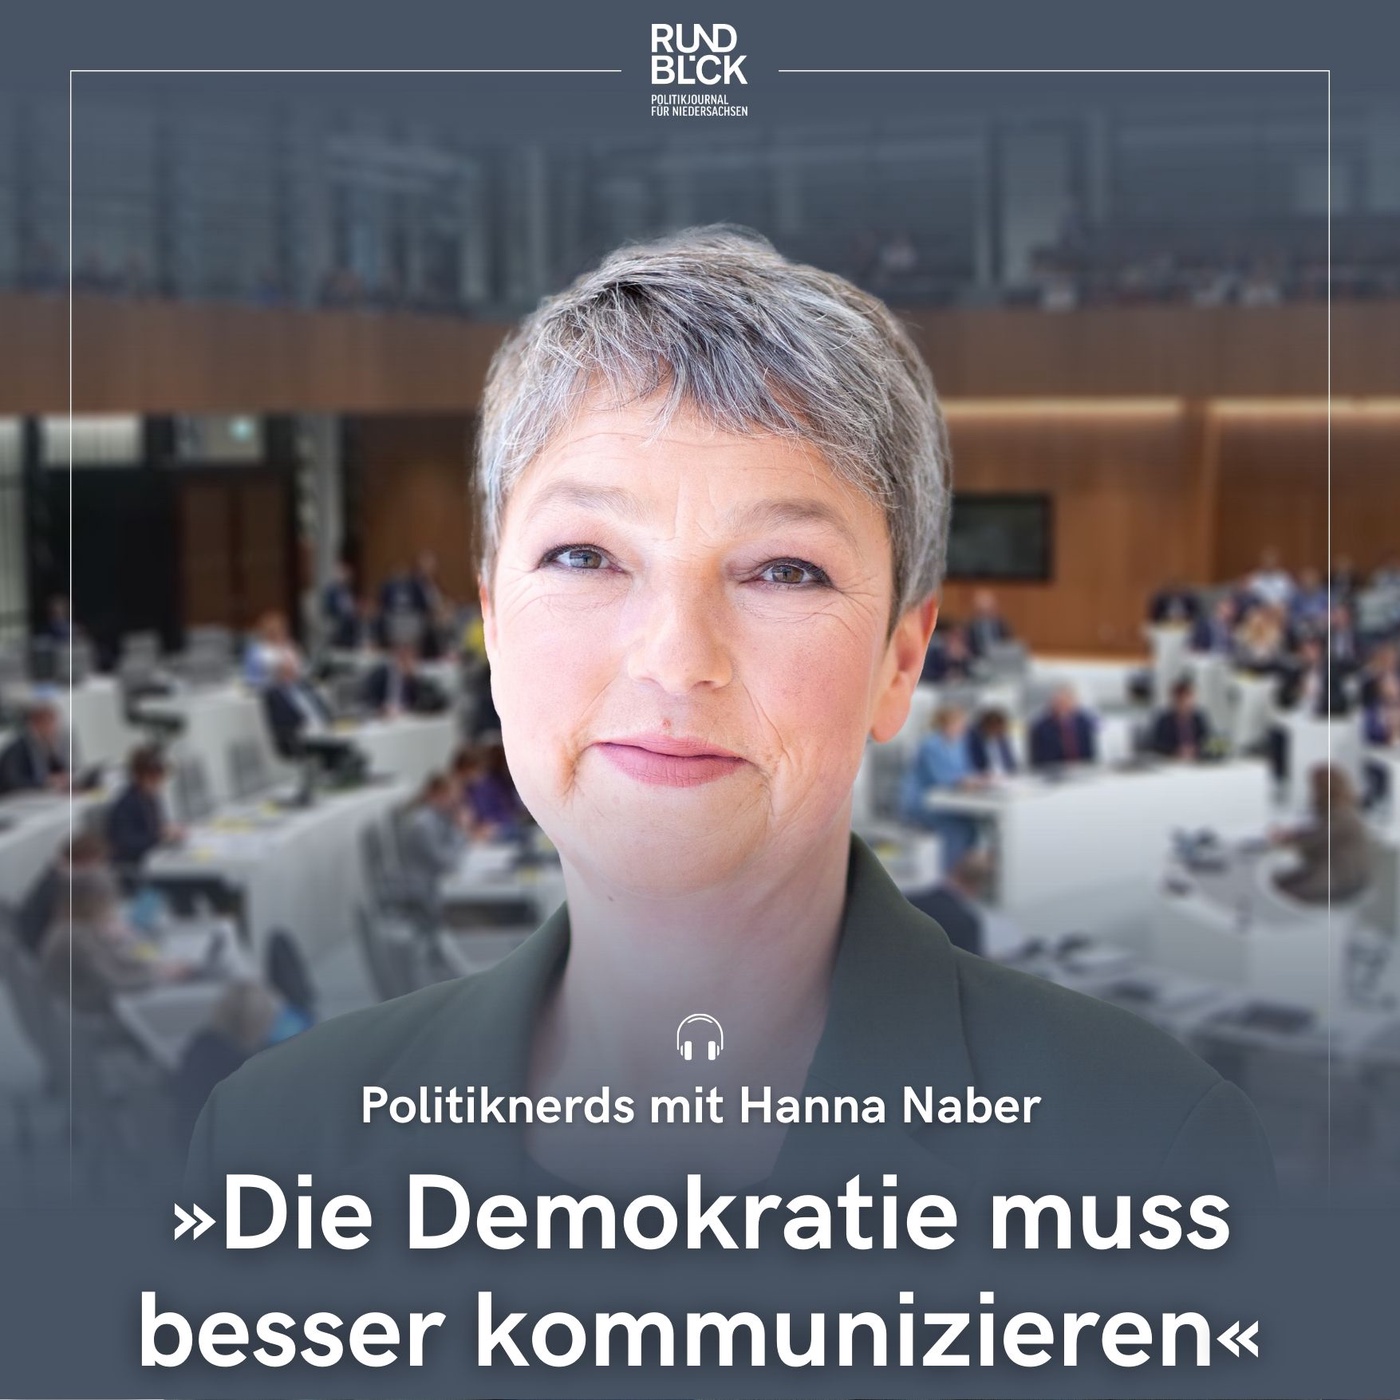 Ist der Korporatismus kaputt, Hanna Naber?